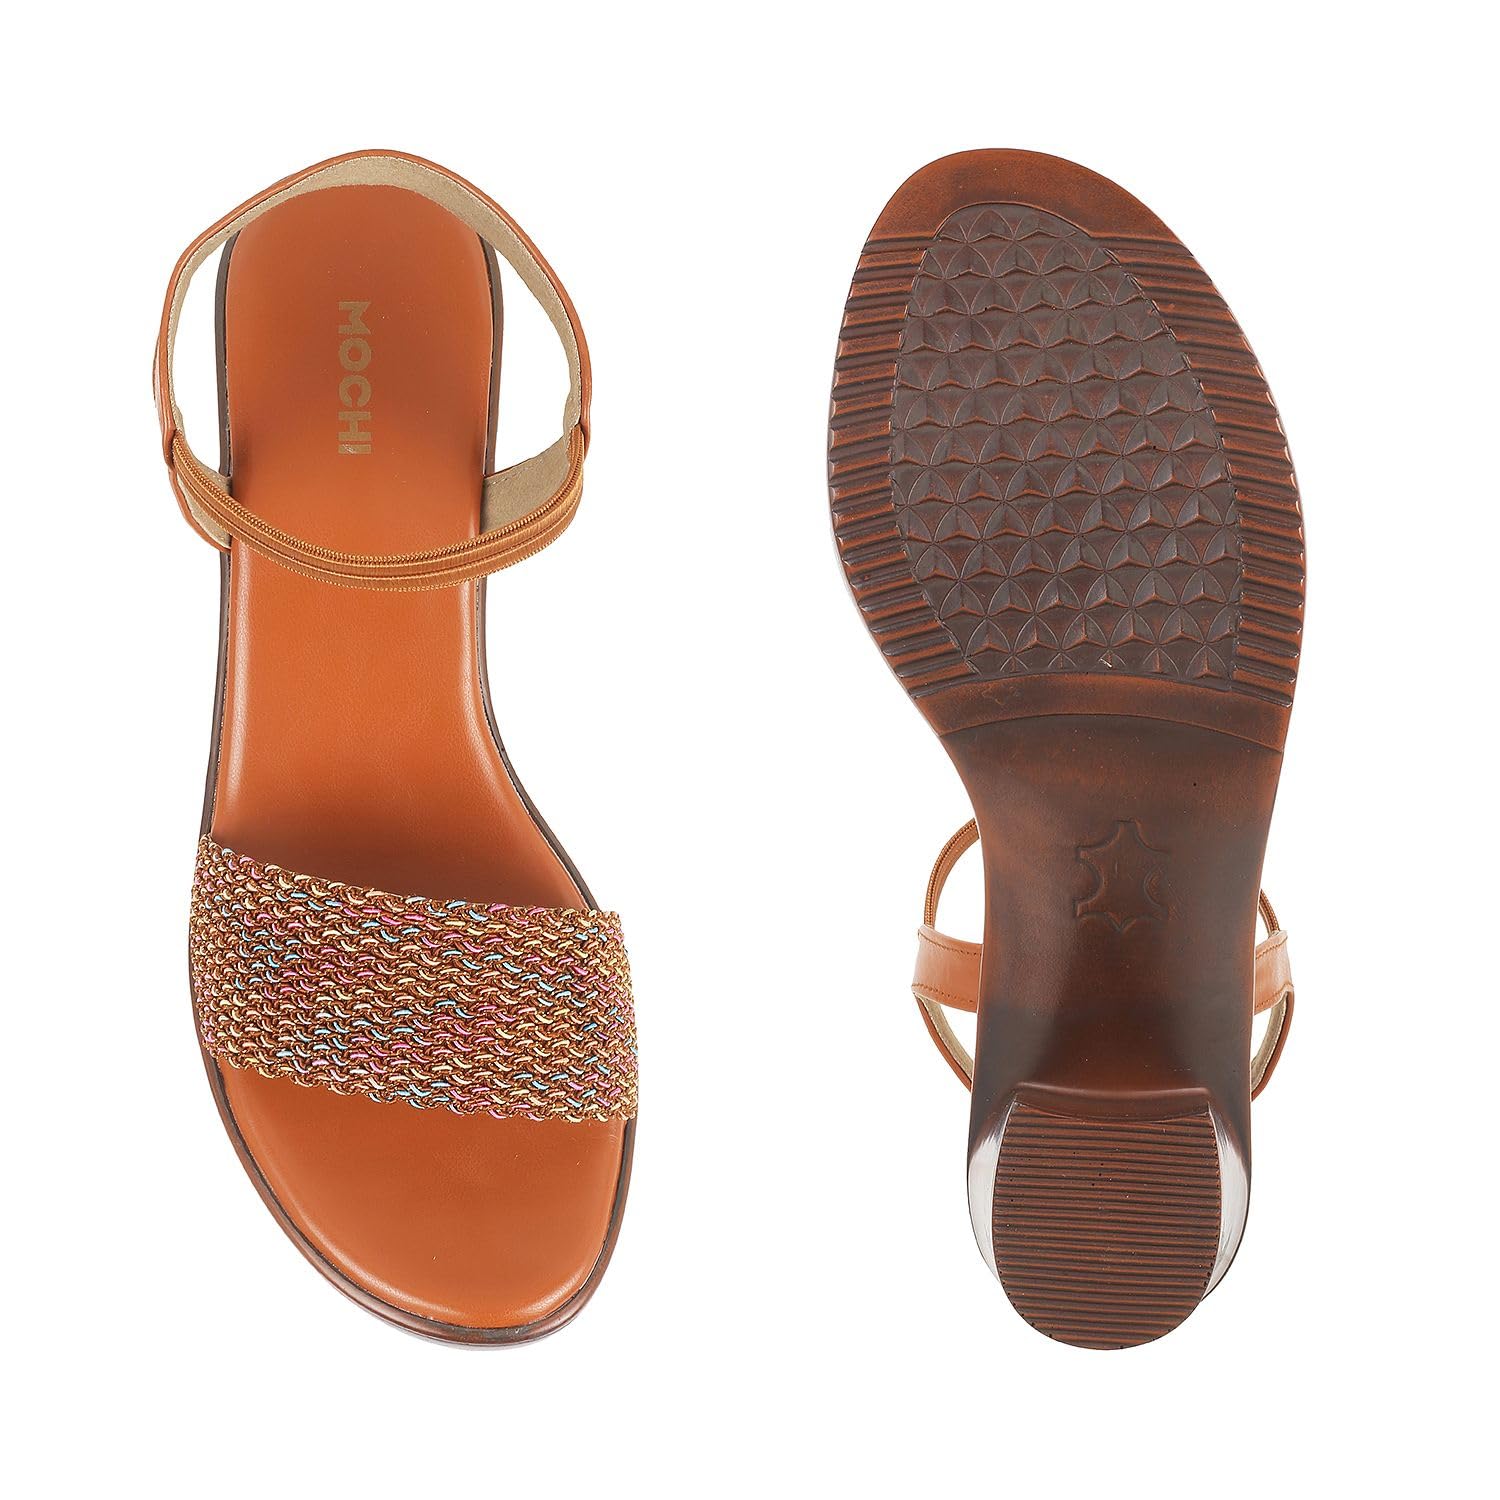 Mochi - Take on the festive season with these gorgeous red block-heel  sandals. . . . #MochiShoes #StayAwesome #style #fashion #shoegame  #shoesaddict #shoes #shoelover #lookbook #shoesoftheday #styleinspo  #fashionaddict #winterfashion #heels #sandals ...